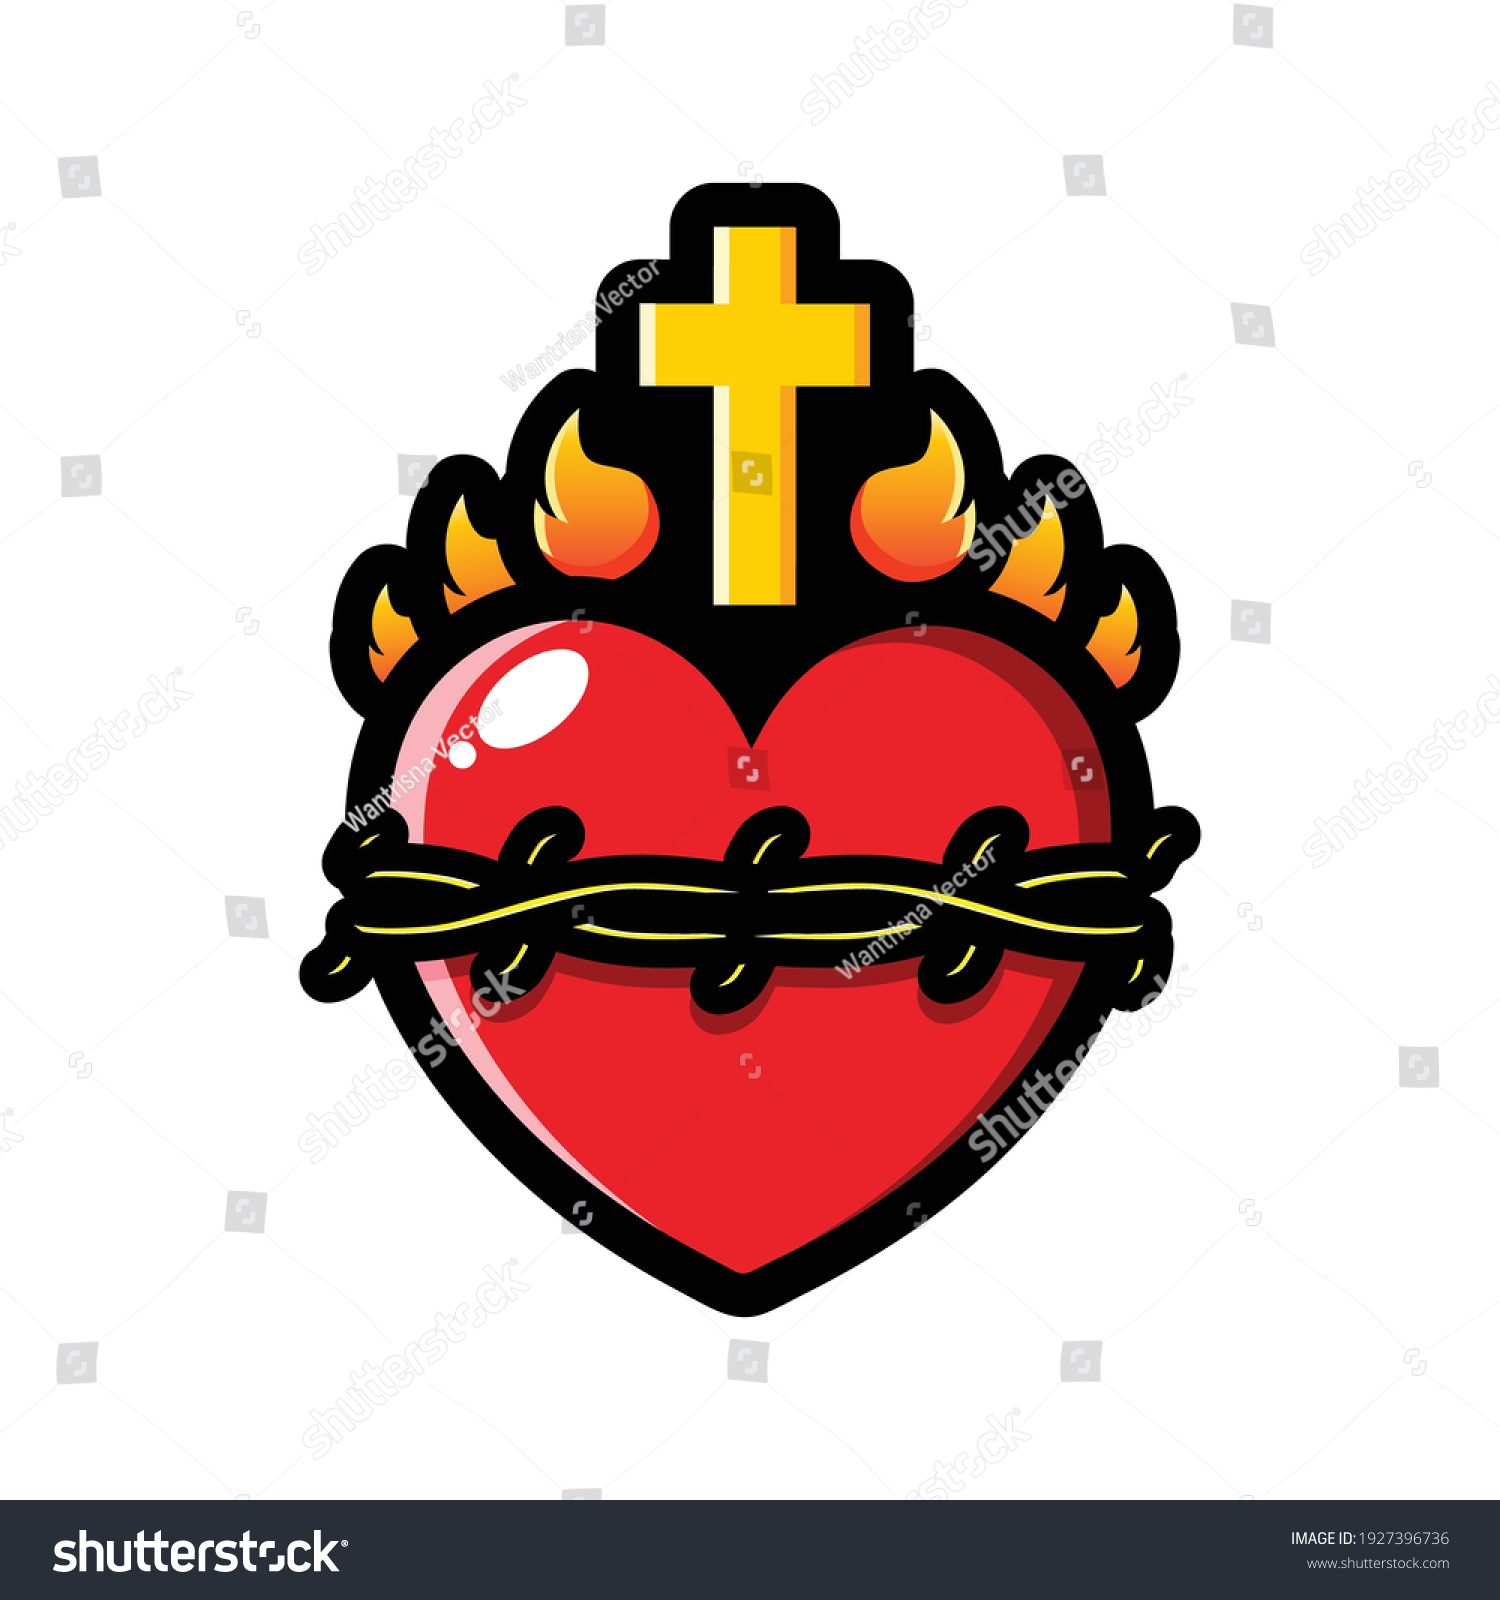 sacred-heart-jesus-christ-stock-vector-royalty-free-1927396736